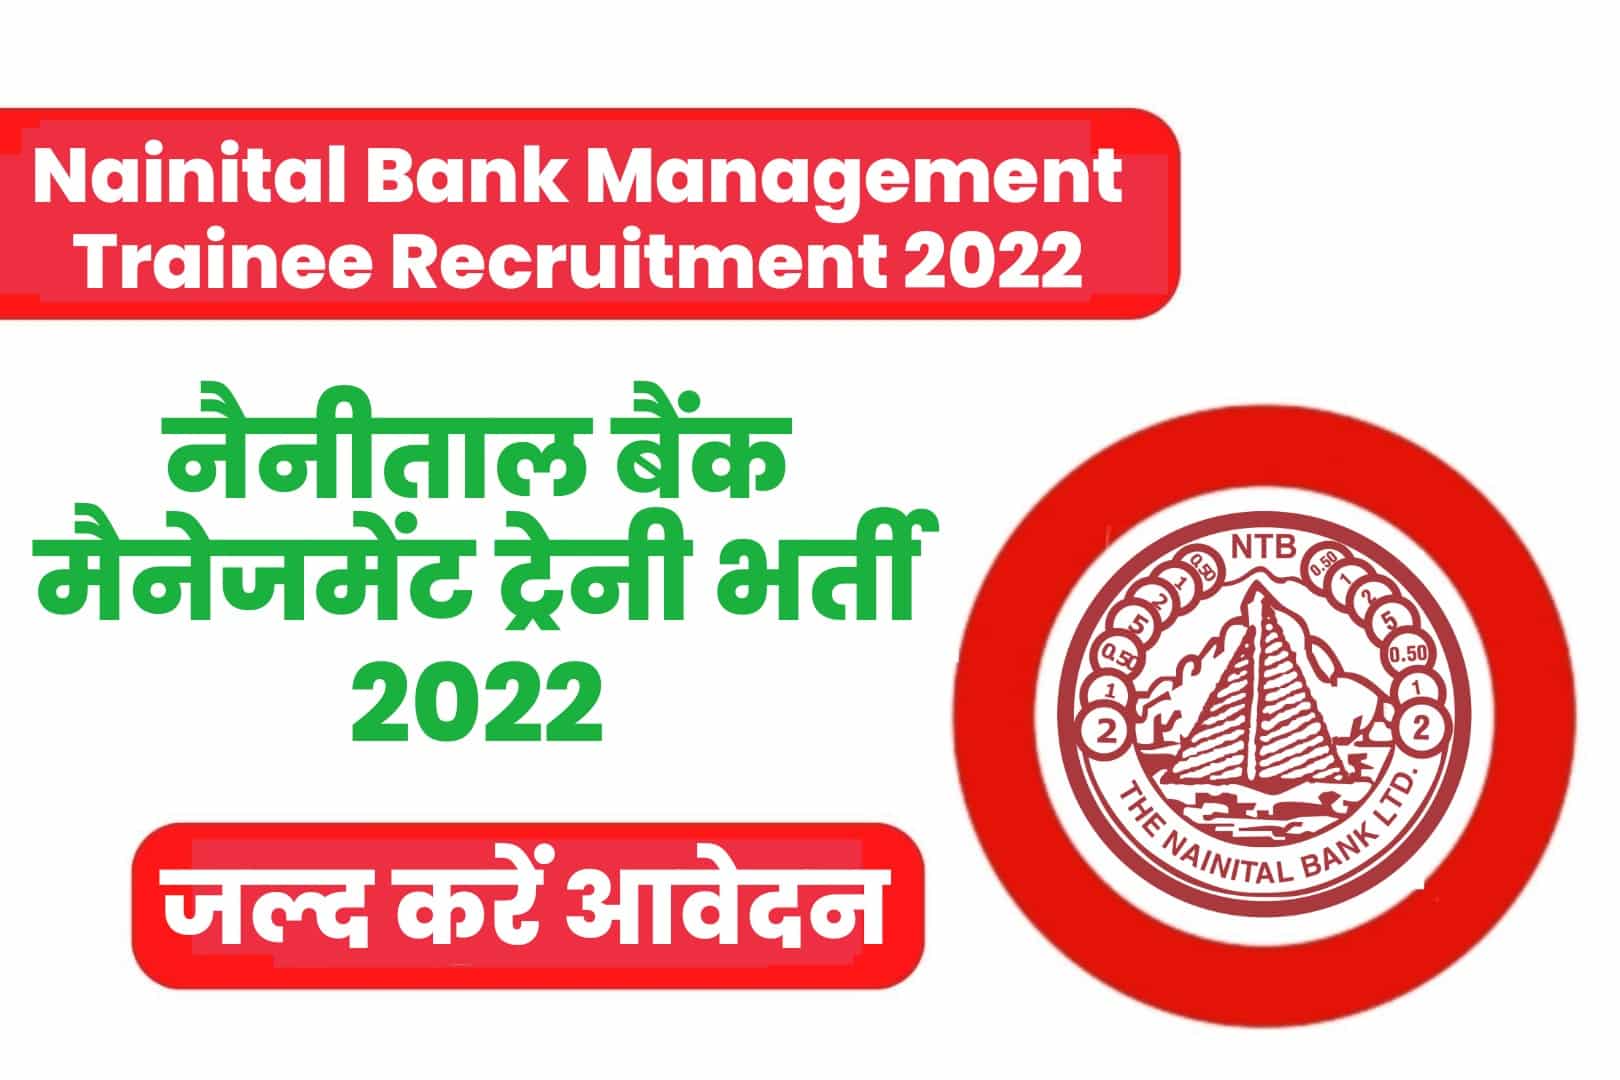 Nainital Bank Management Trainee Recruitment 2022 Online Form | नैनीताल बैंक मैनेजमेंट ट्रेनी भर्ती 2022